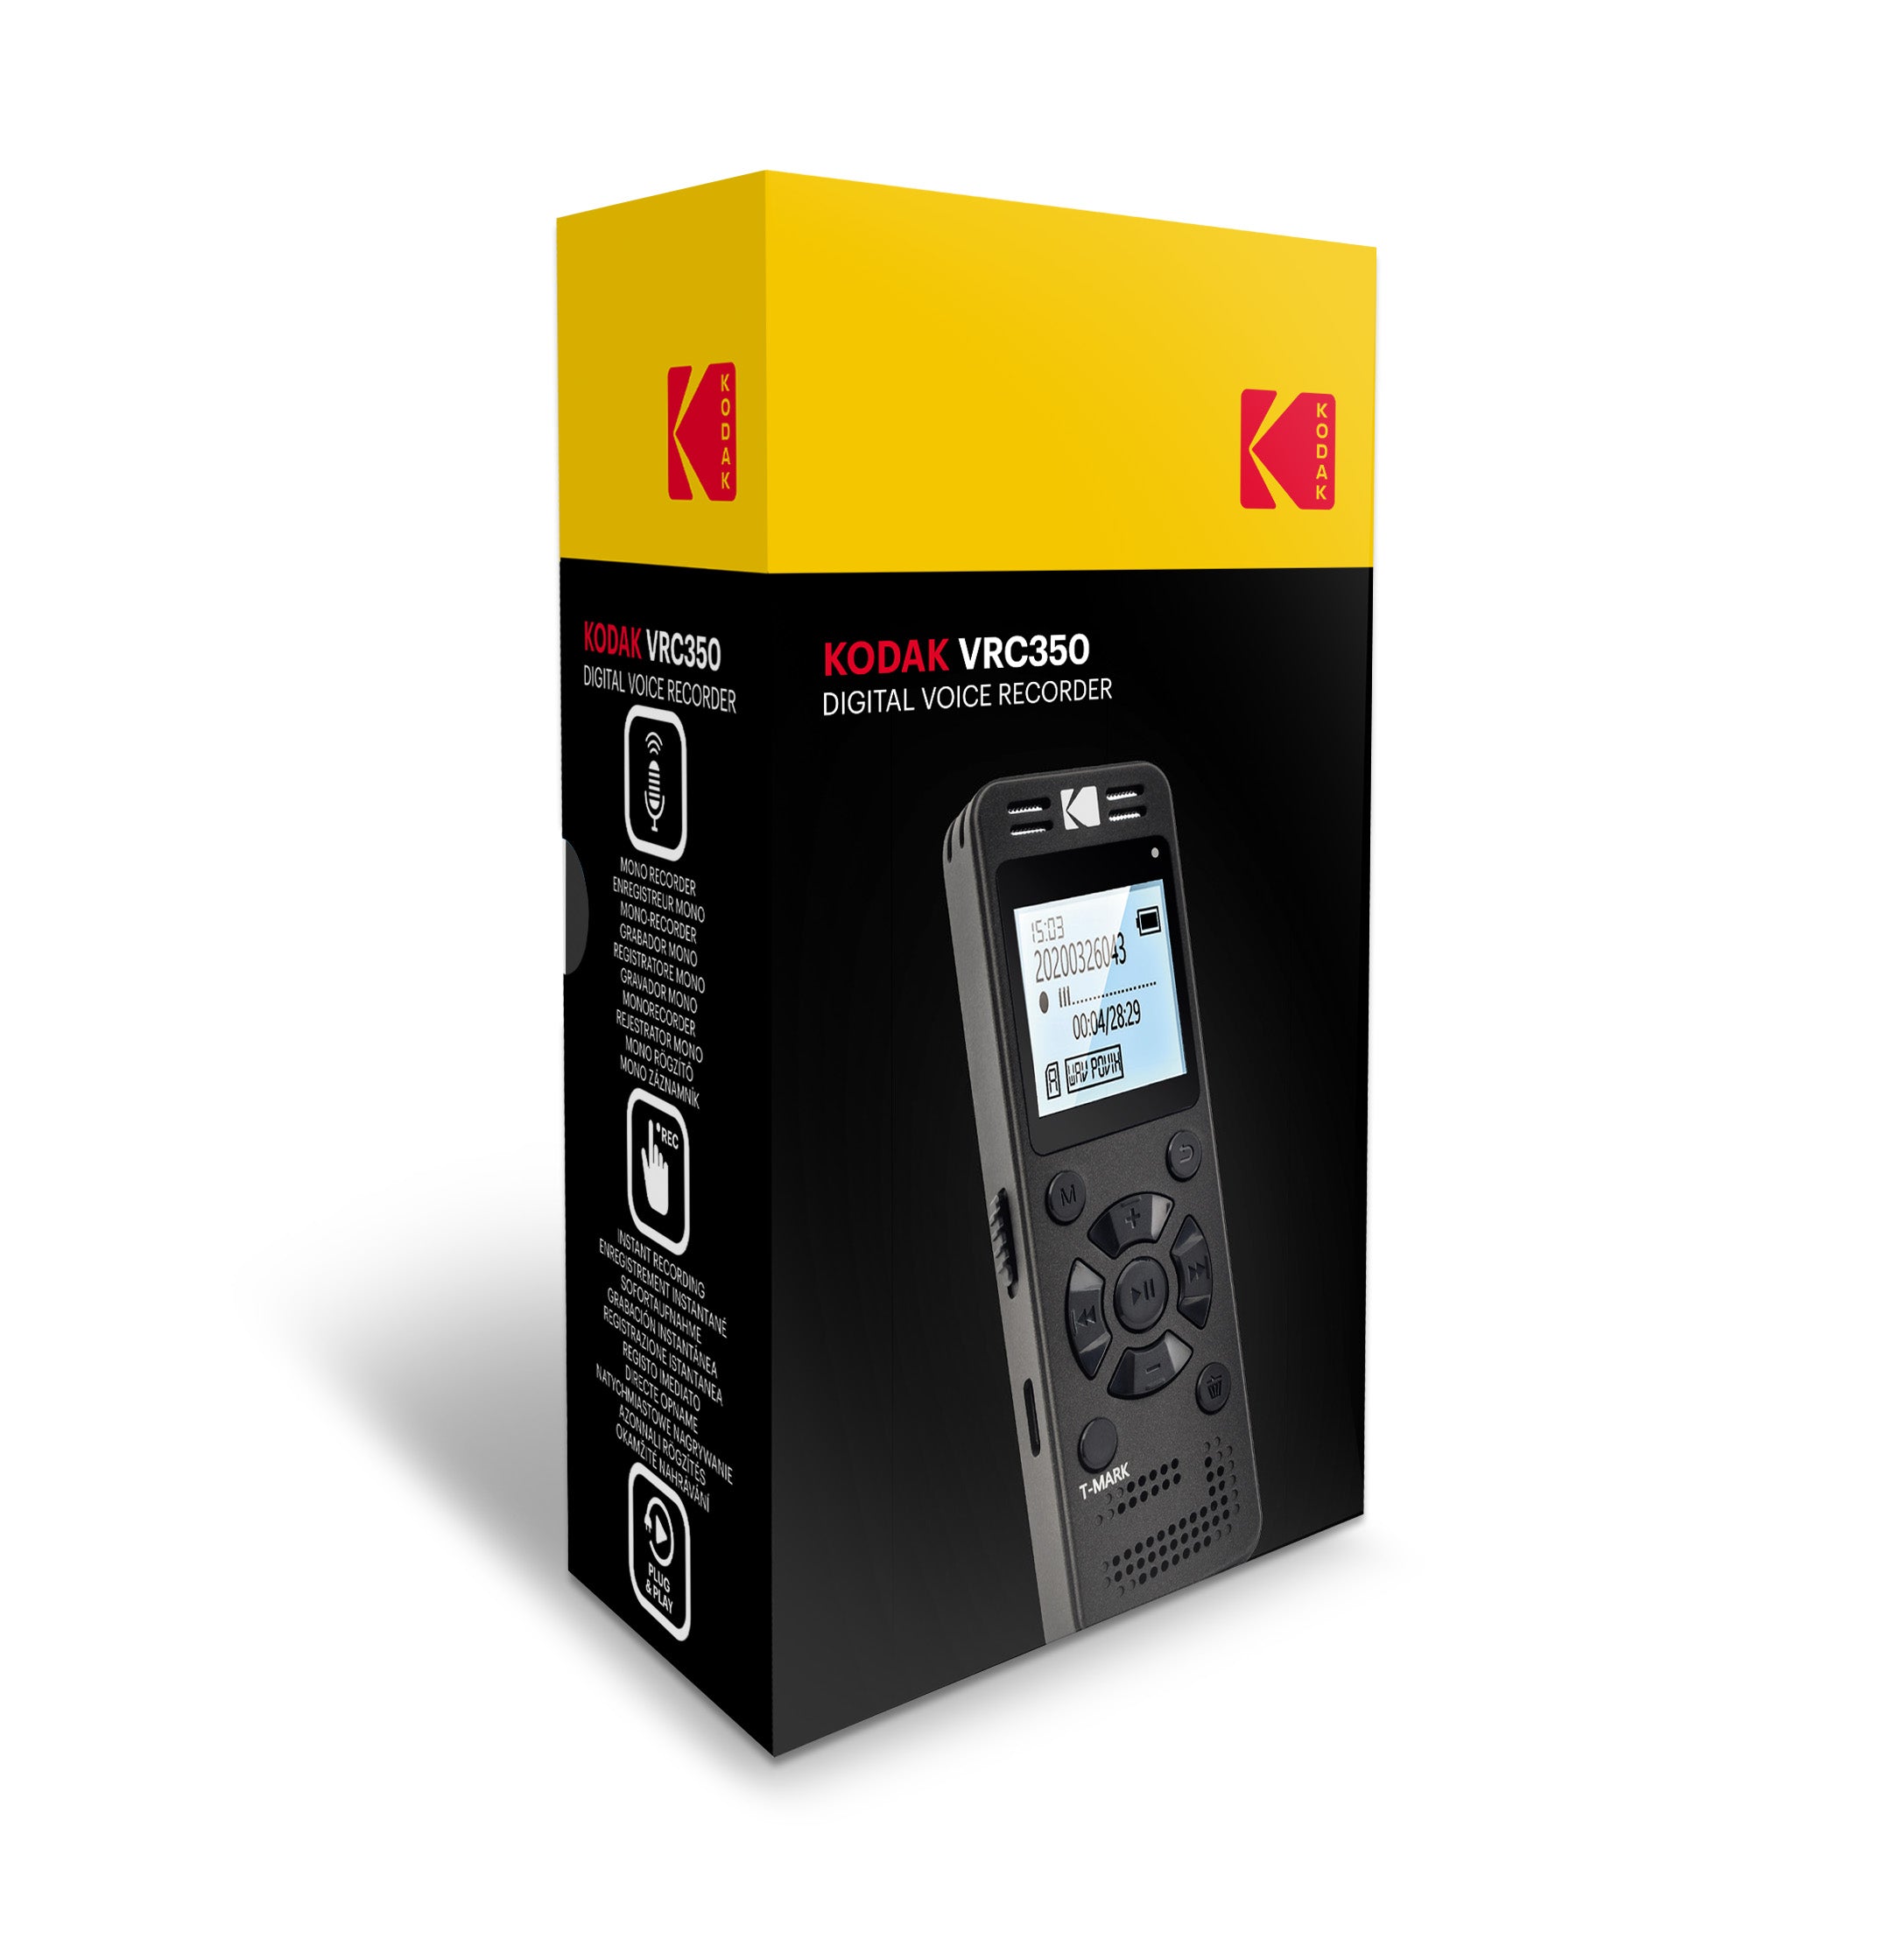 Kodak VRC350 Digital Voice Recorder with 8GB Memory